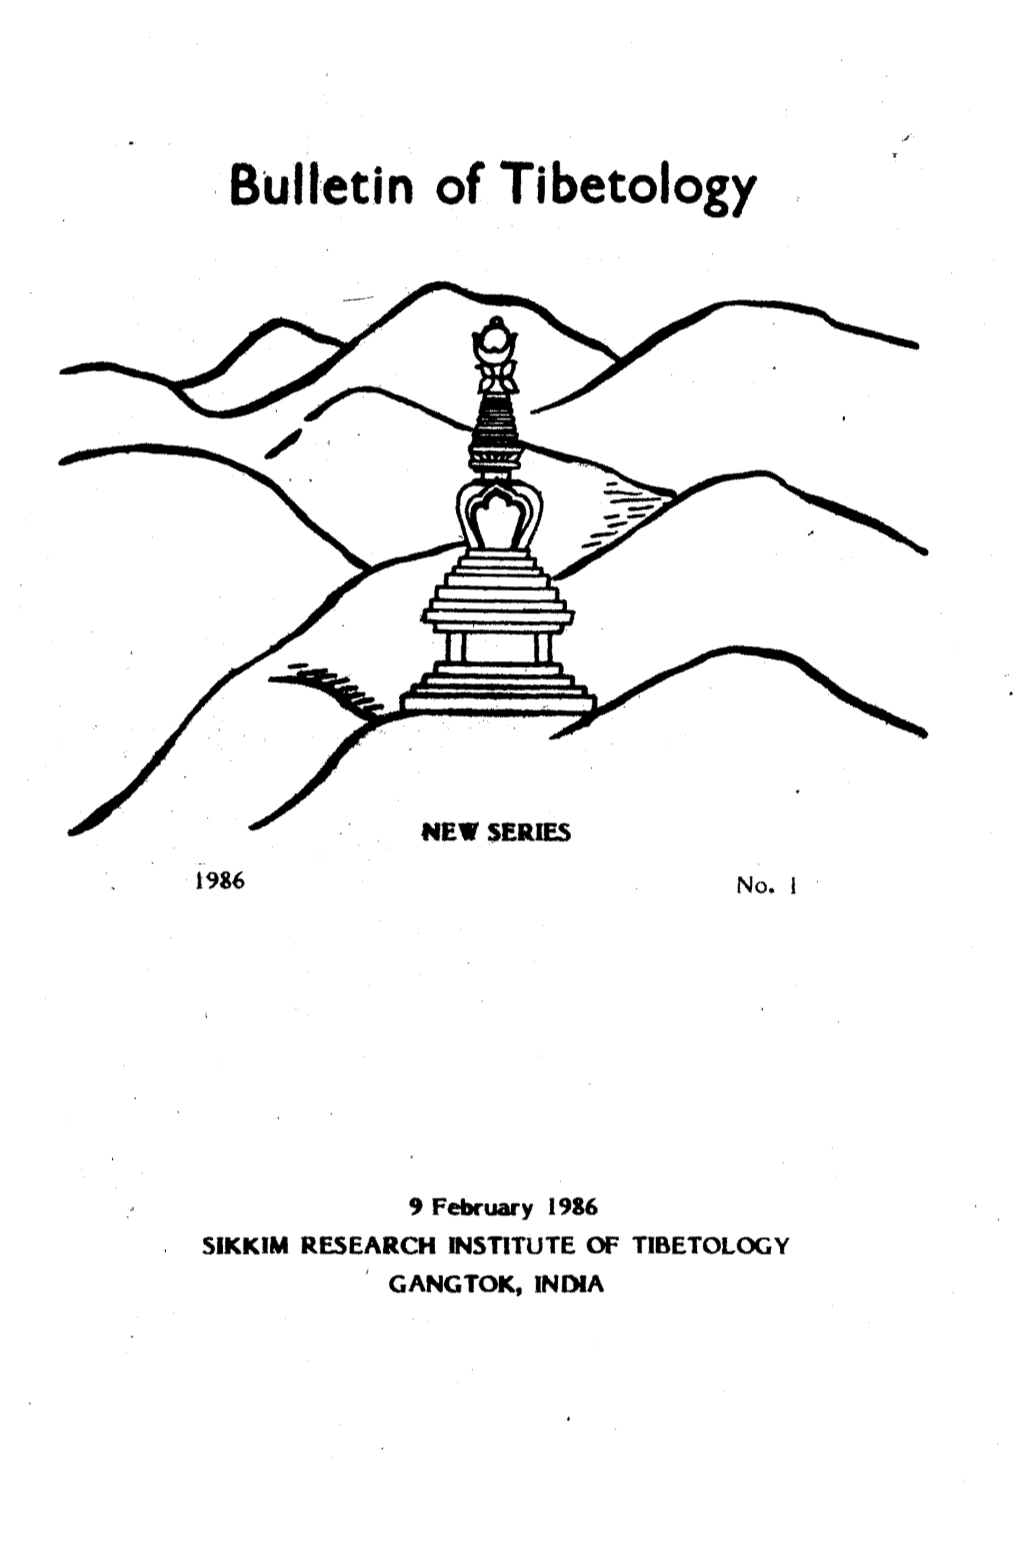 Bulletin of Tibetology Seeks to Serve The